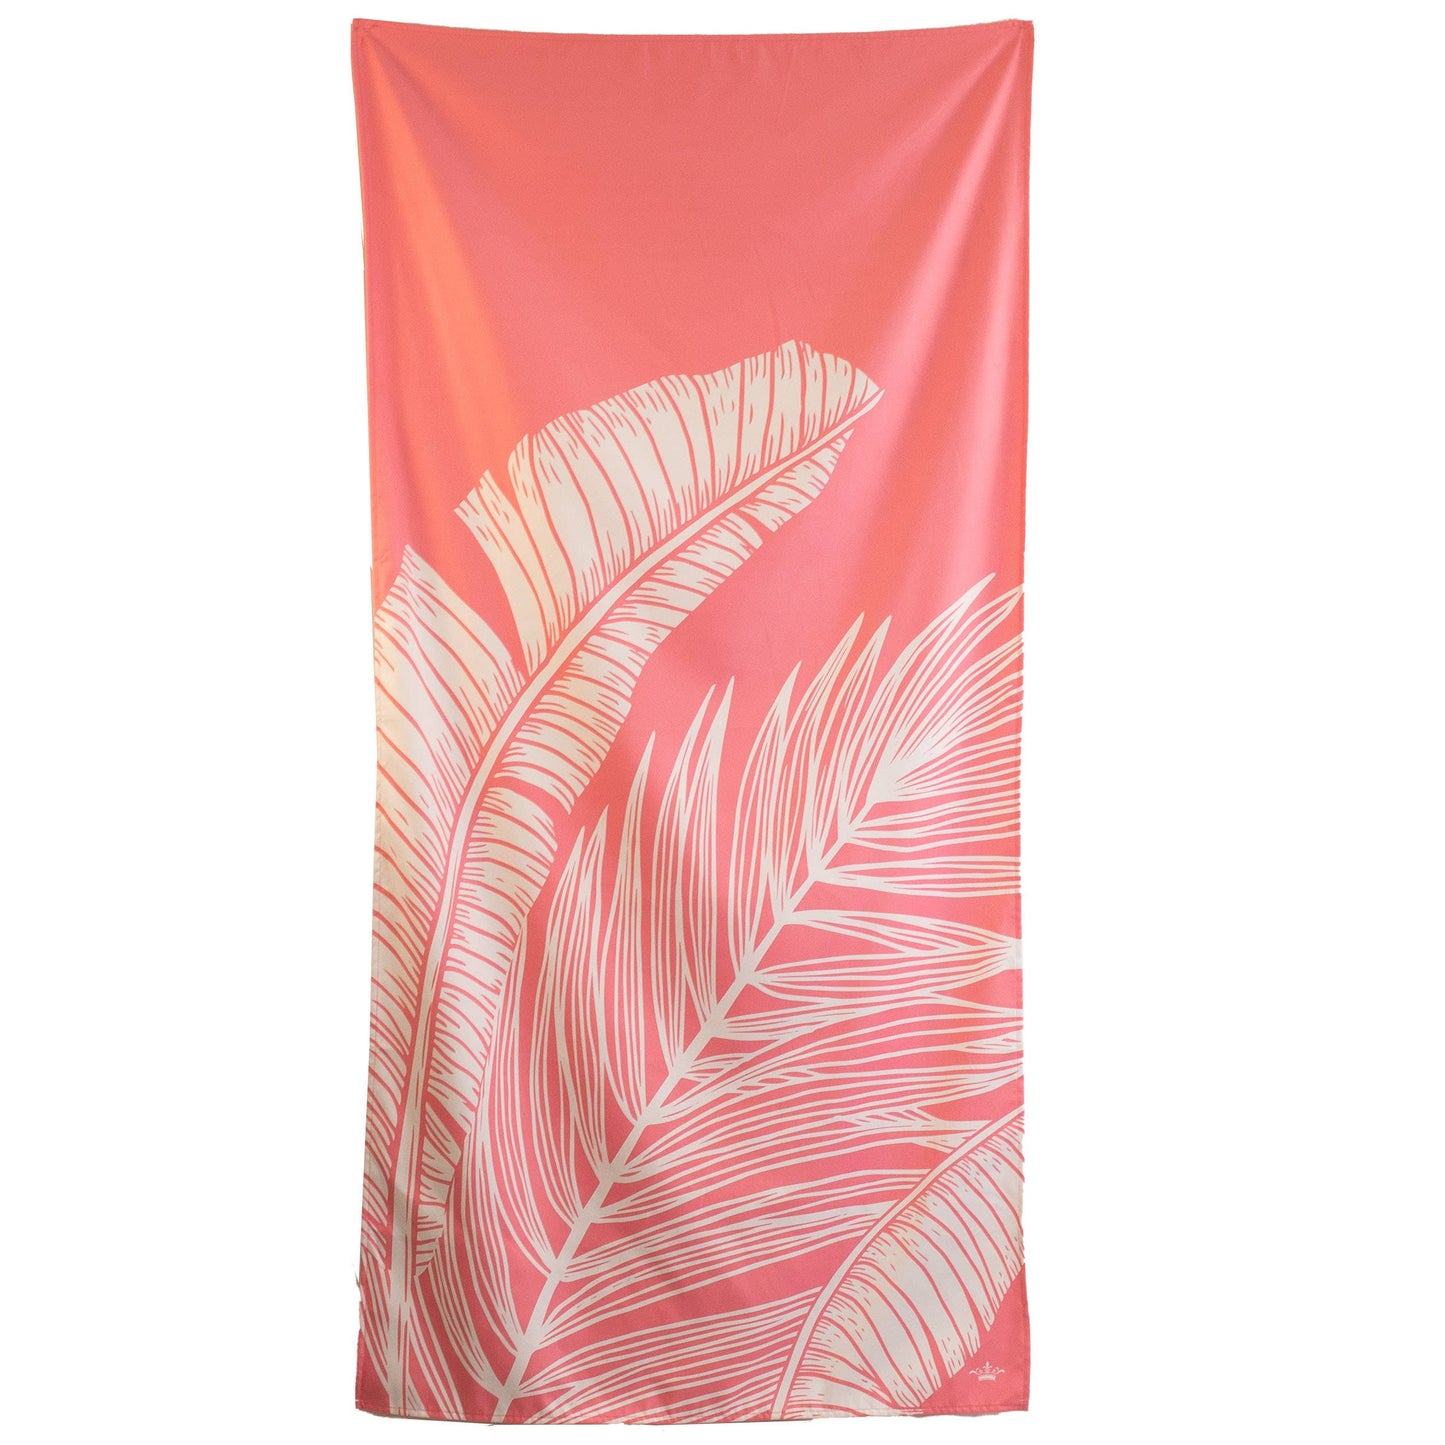 Delmare Palm Beach Towel   Light Pink/White   34x70